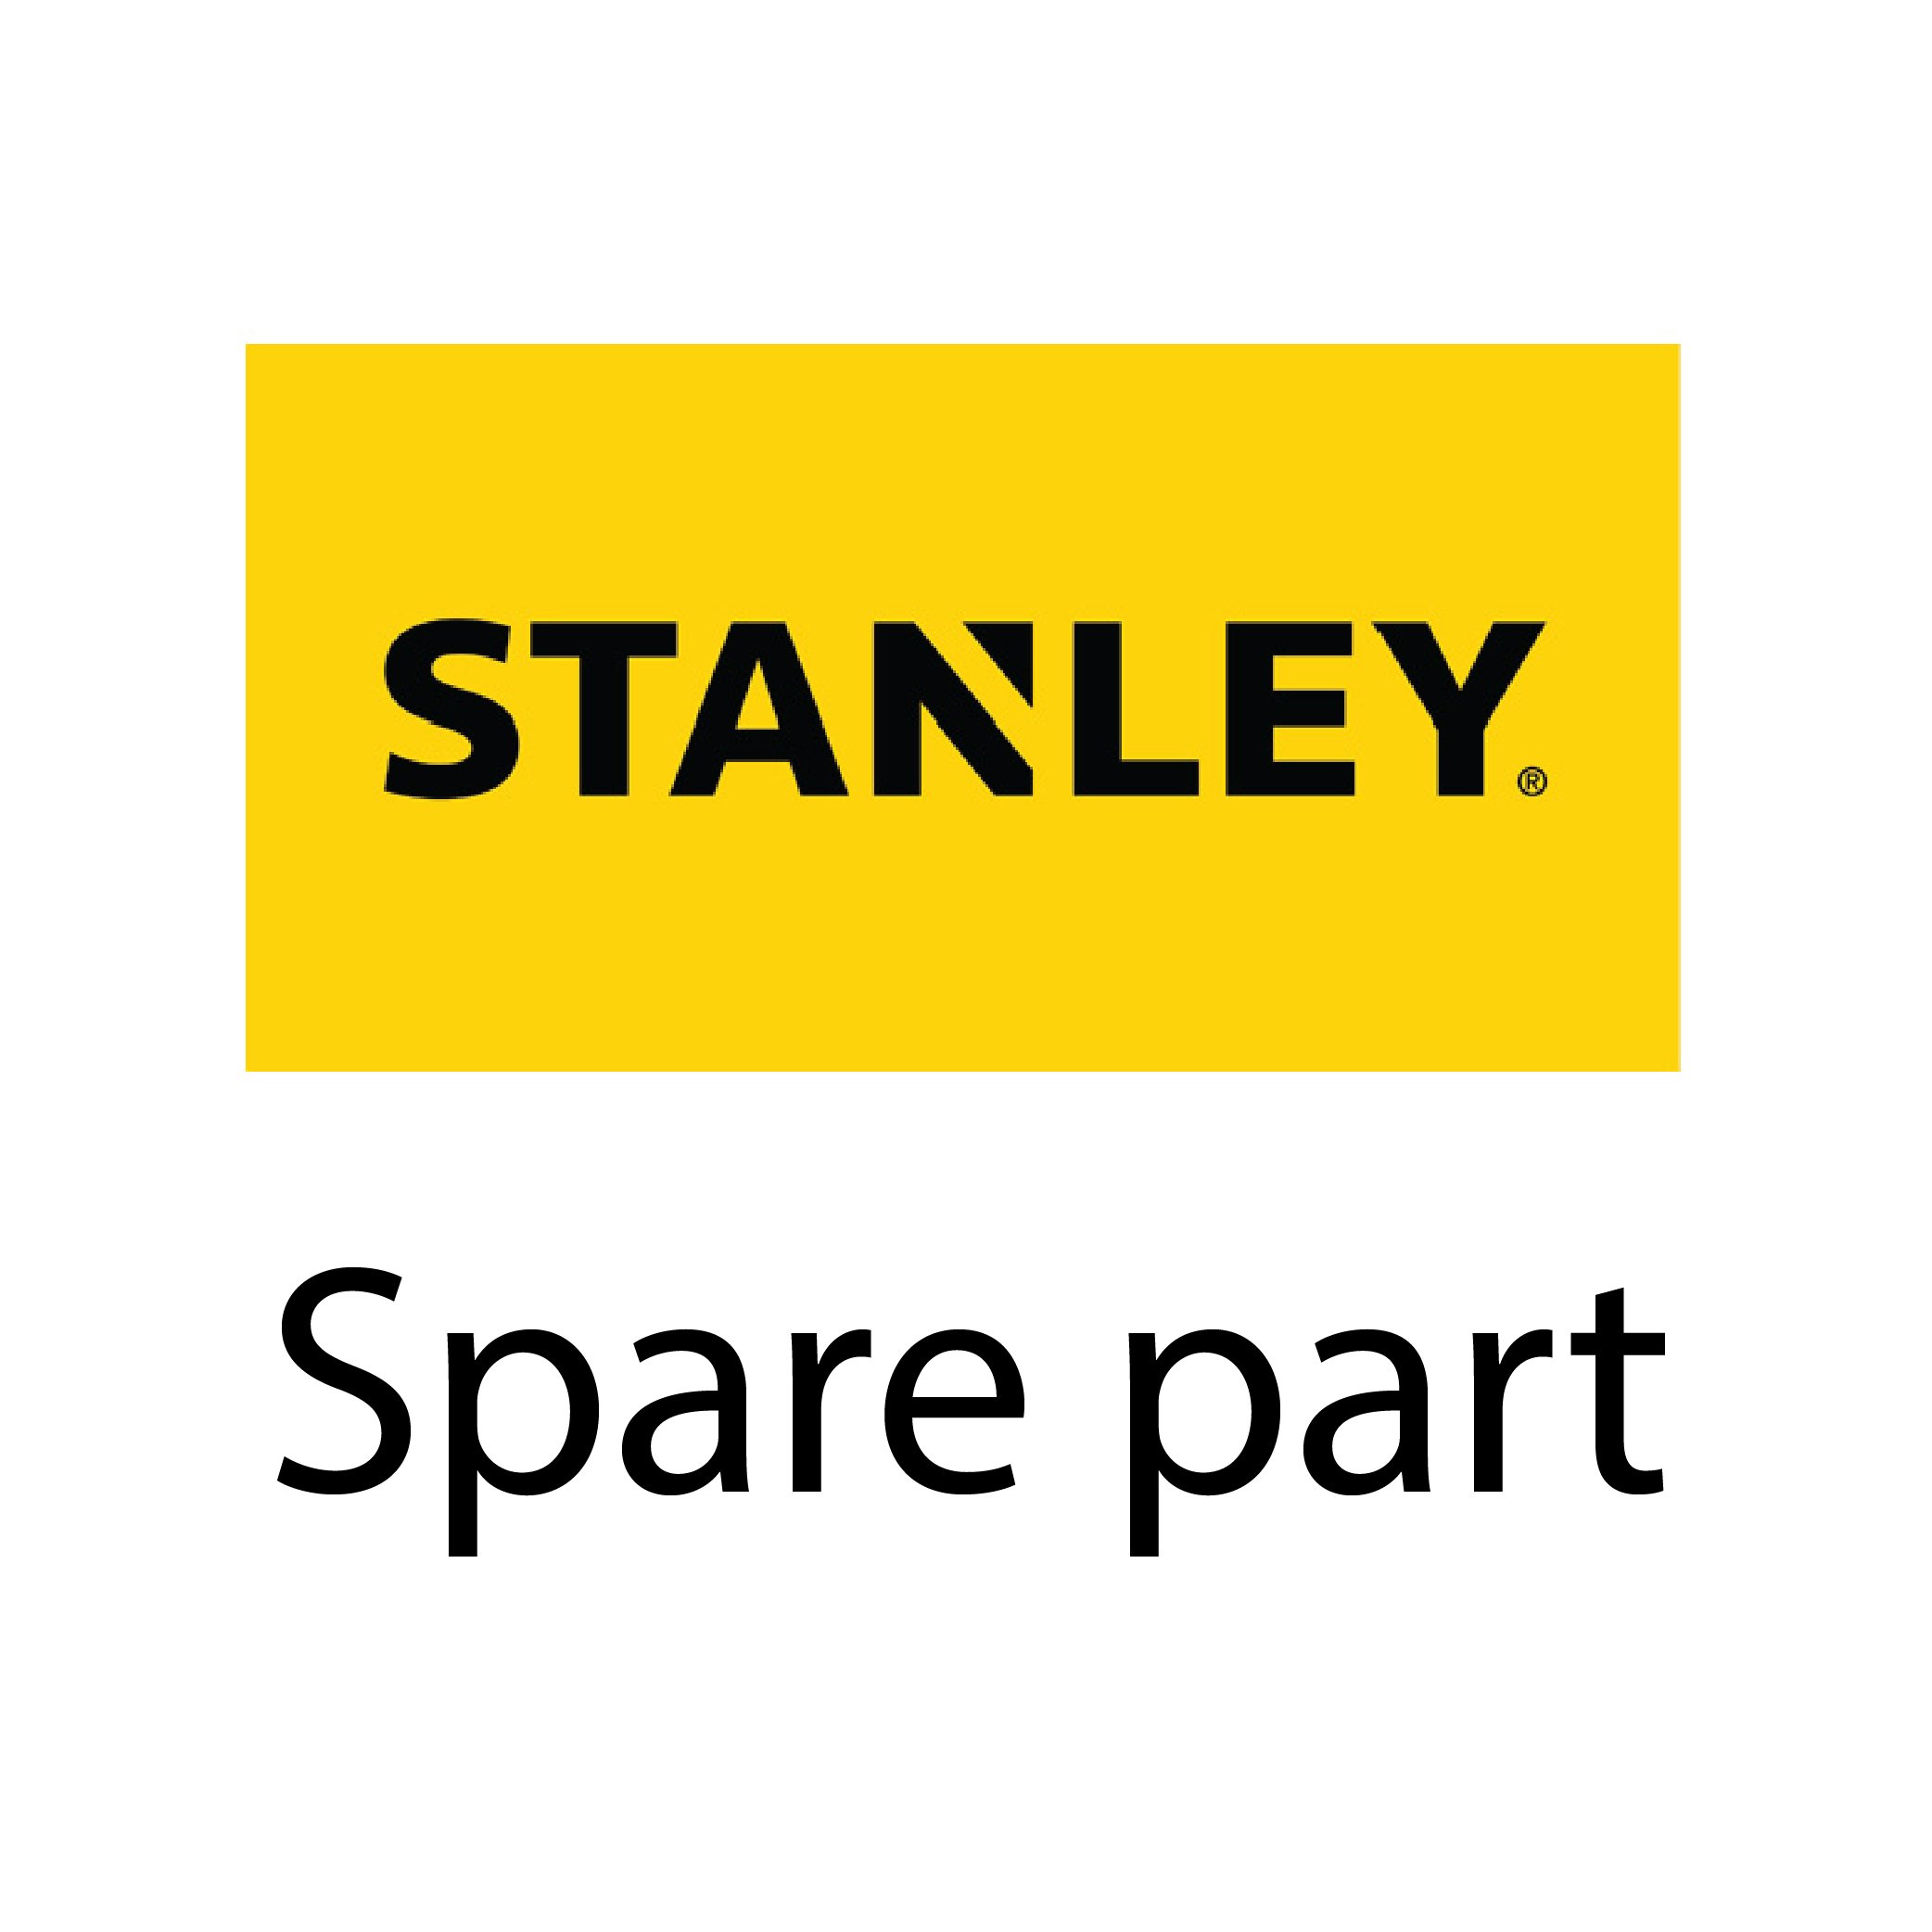 SKI - สกี จำหน่ายสินค้าหลากหลาย และคุณภาพดี | STANLEY #90547177 ทุ่น STEL146